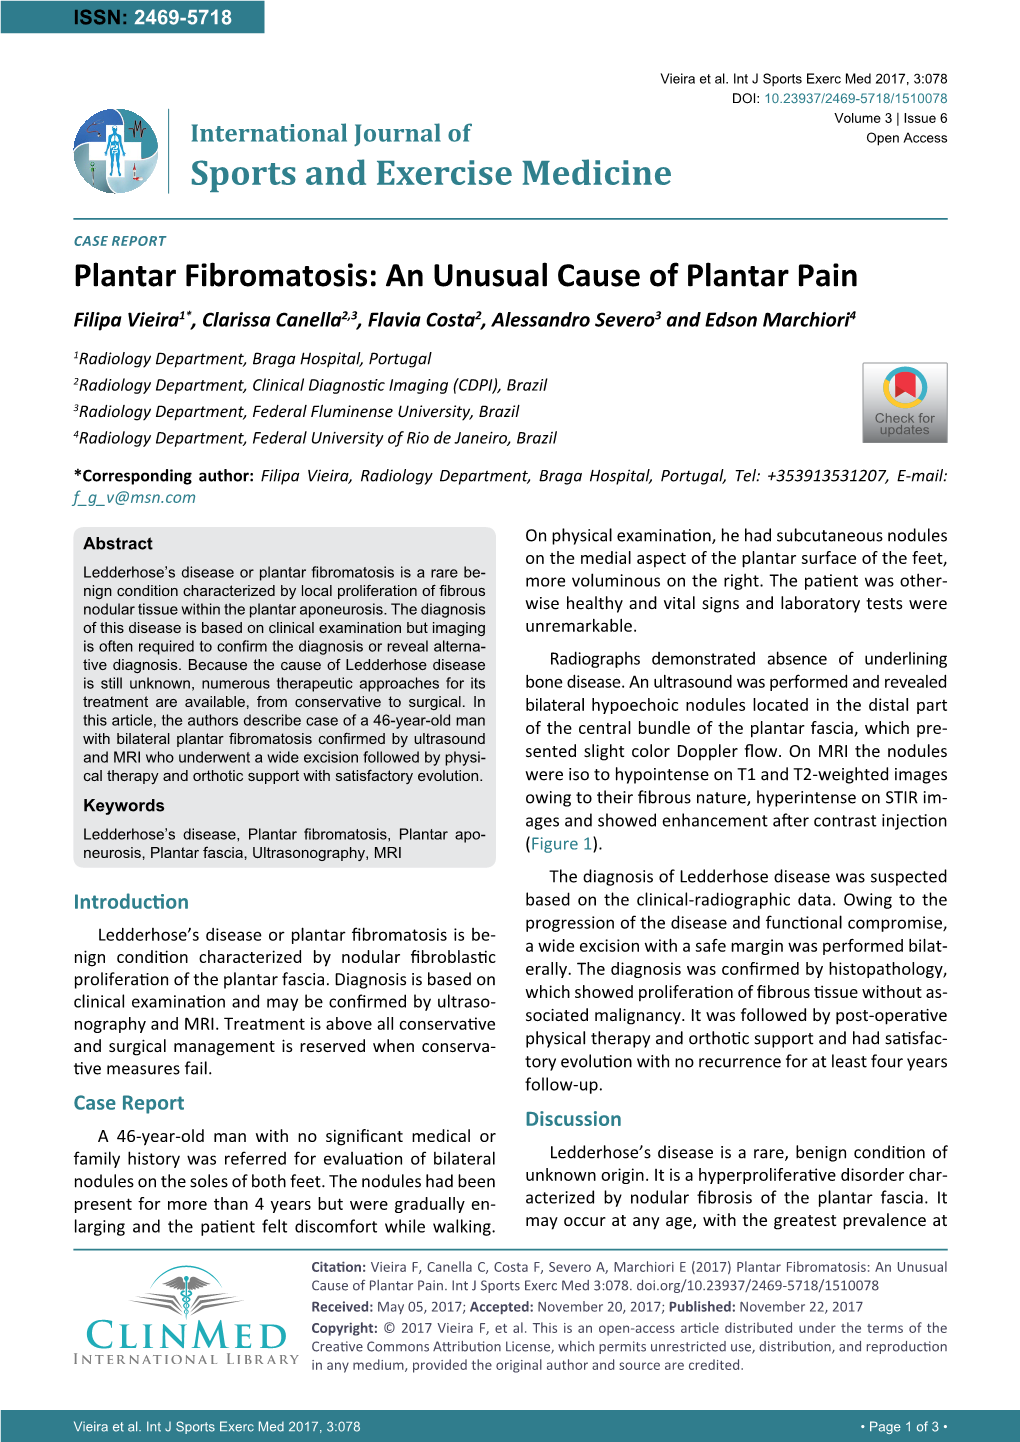 Plantar Fibromatosis: an Unusual Cause of Plantar Pain Filipa Vieira1*, Clarissa Canella2,3, Flavia Costa2, Alessandro Severo3 and Edson Marchiori4